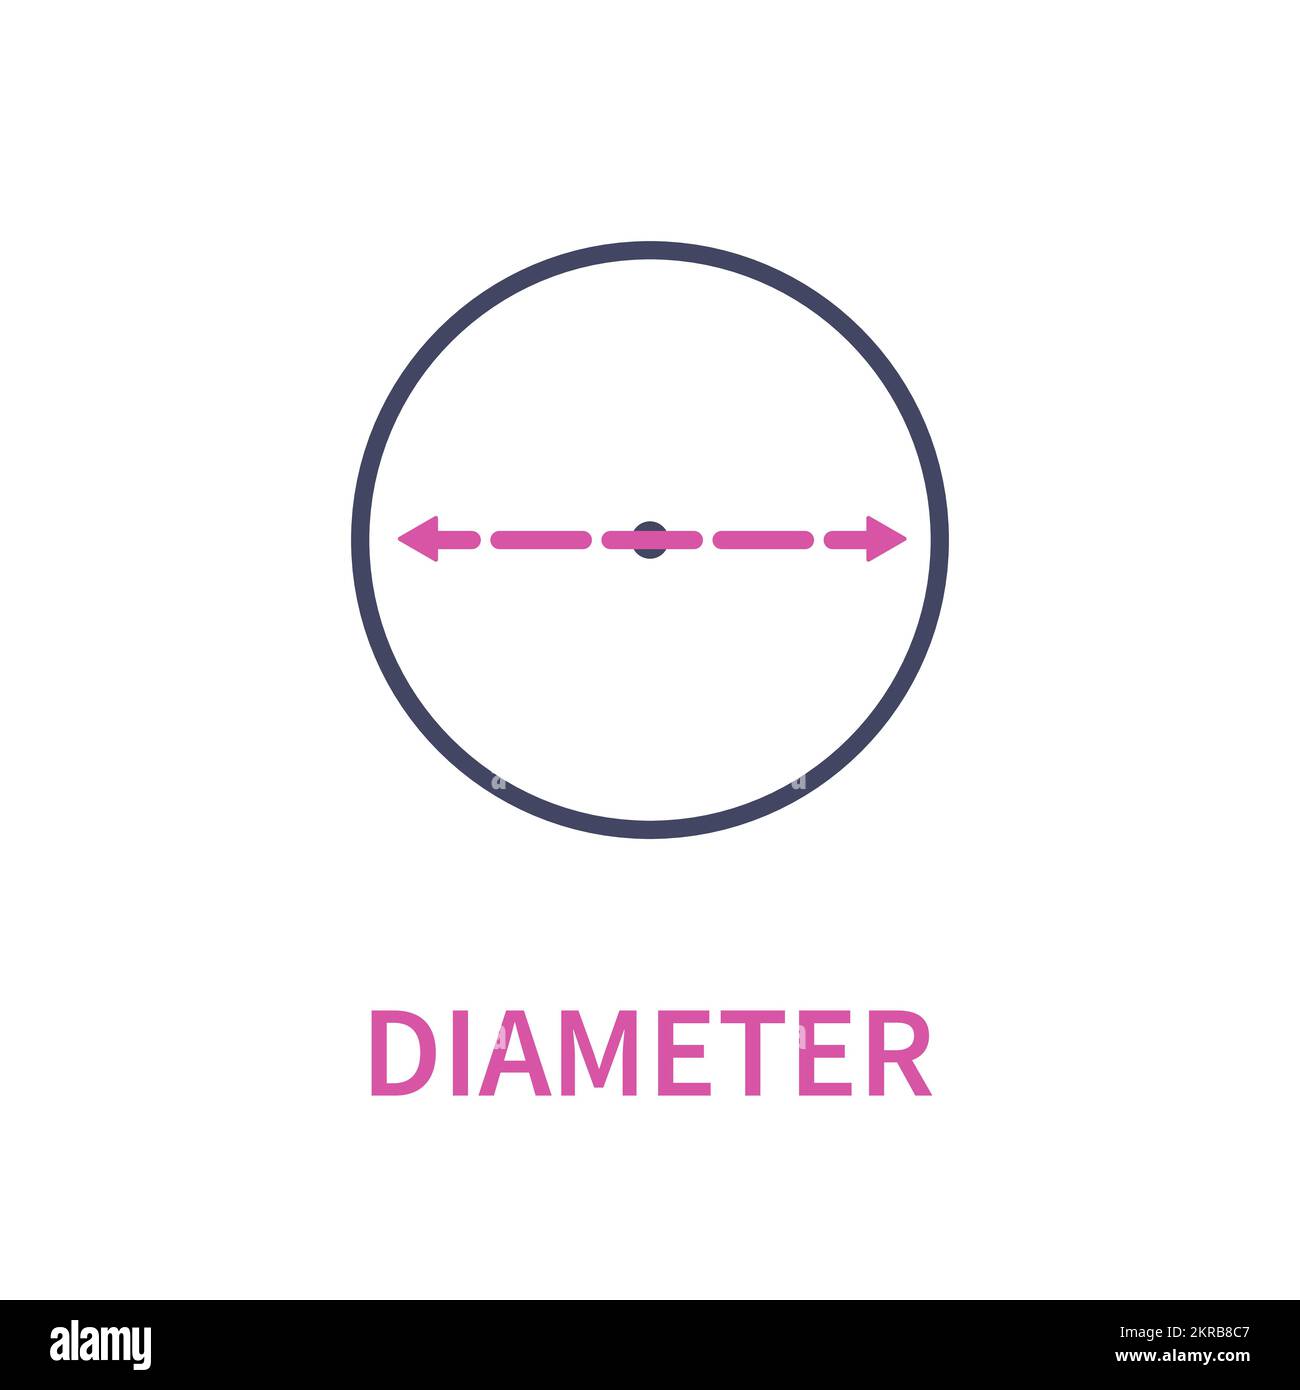 Diameter circle geometric diagram icon Stock Vector